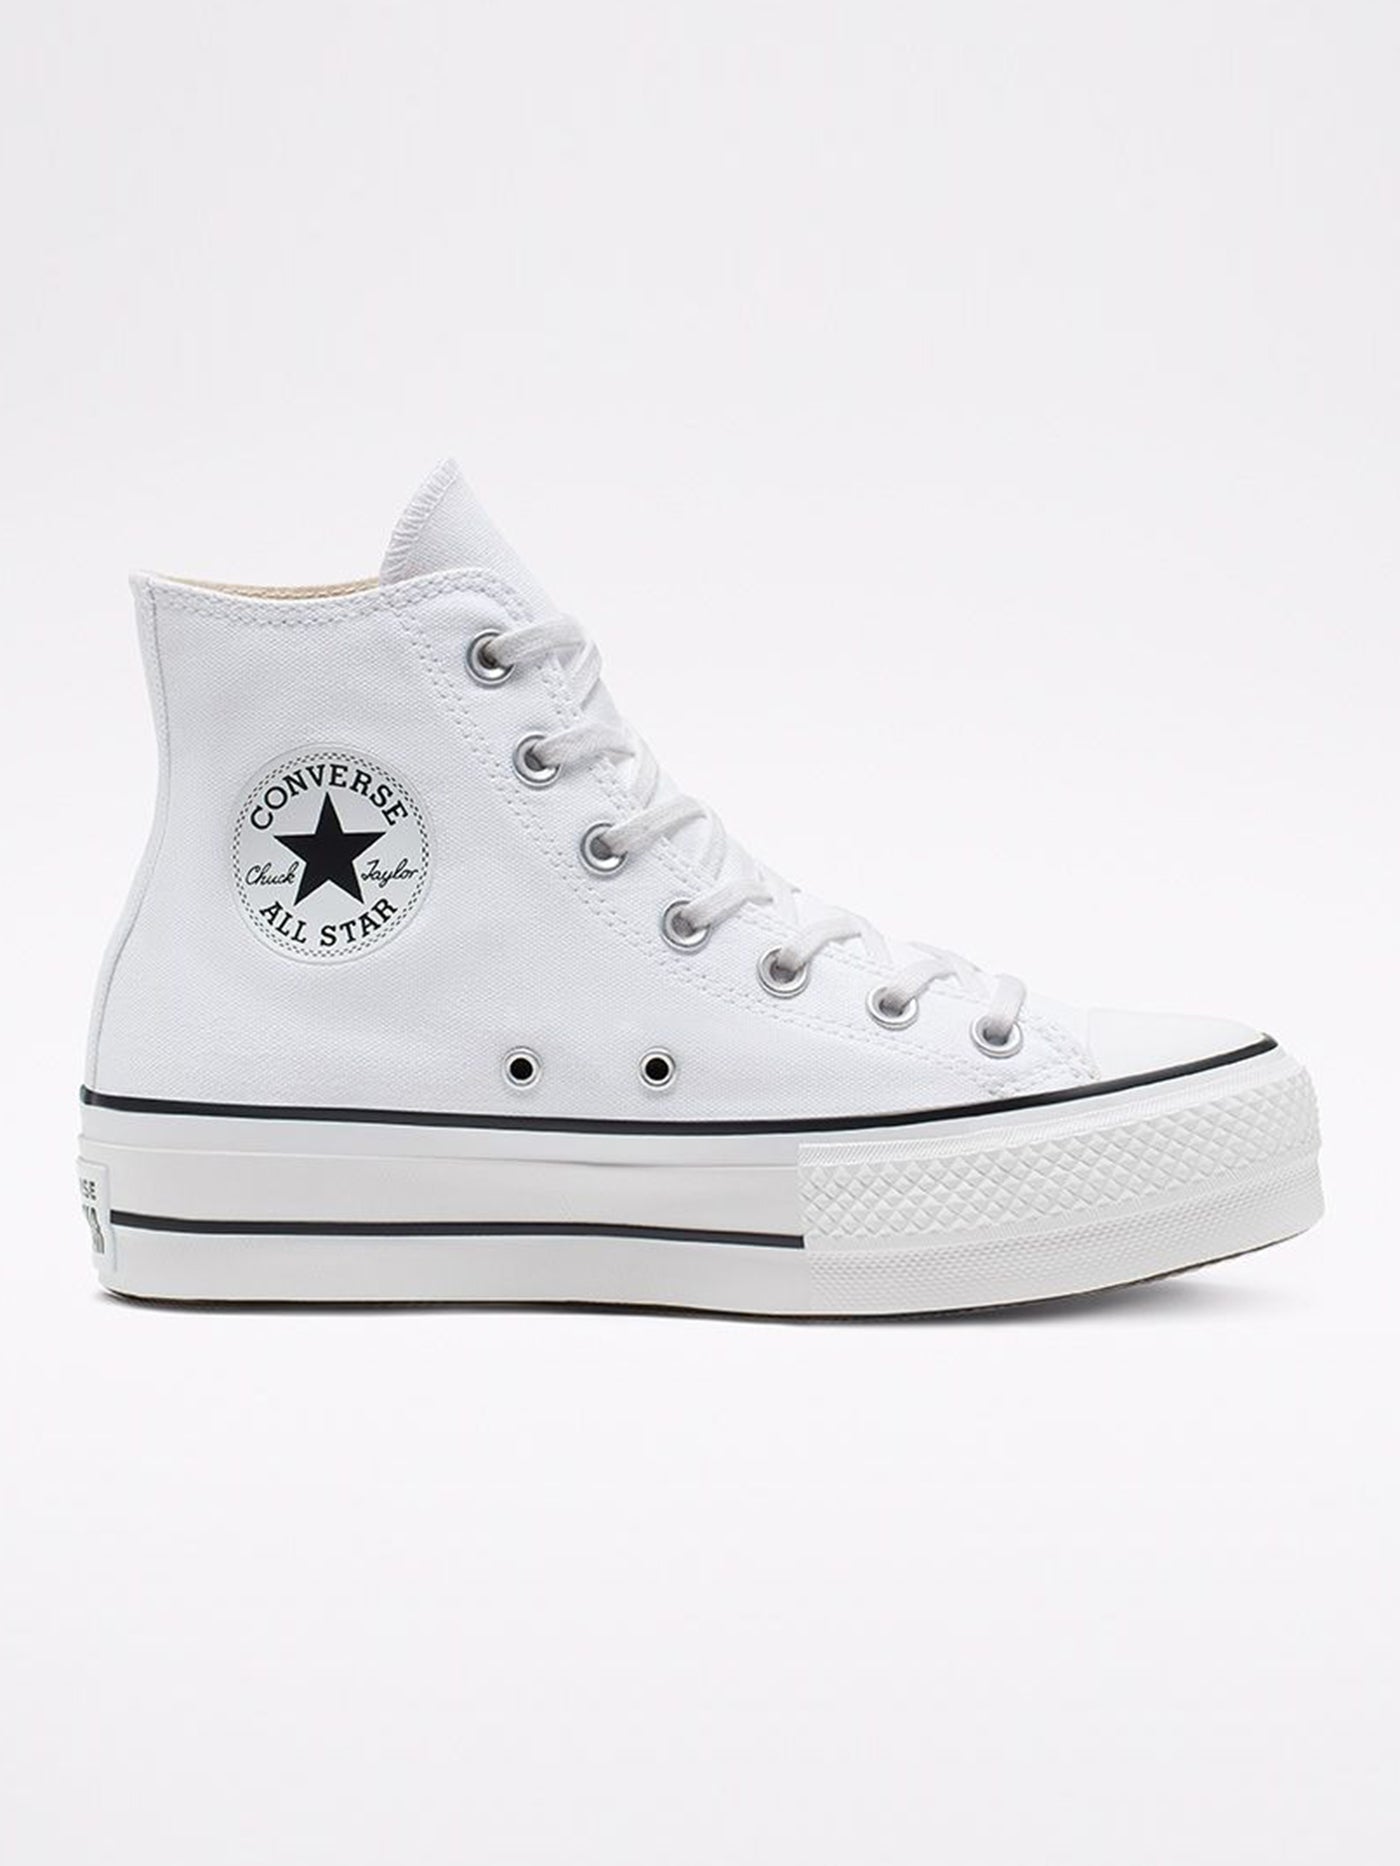 Converse Chuck Taylor All Star Lift Hi White/Black Shoes